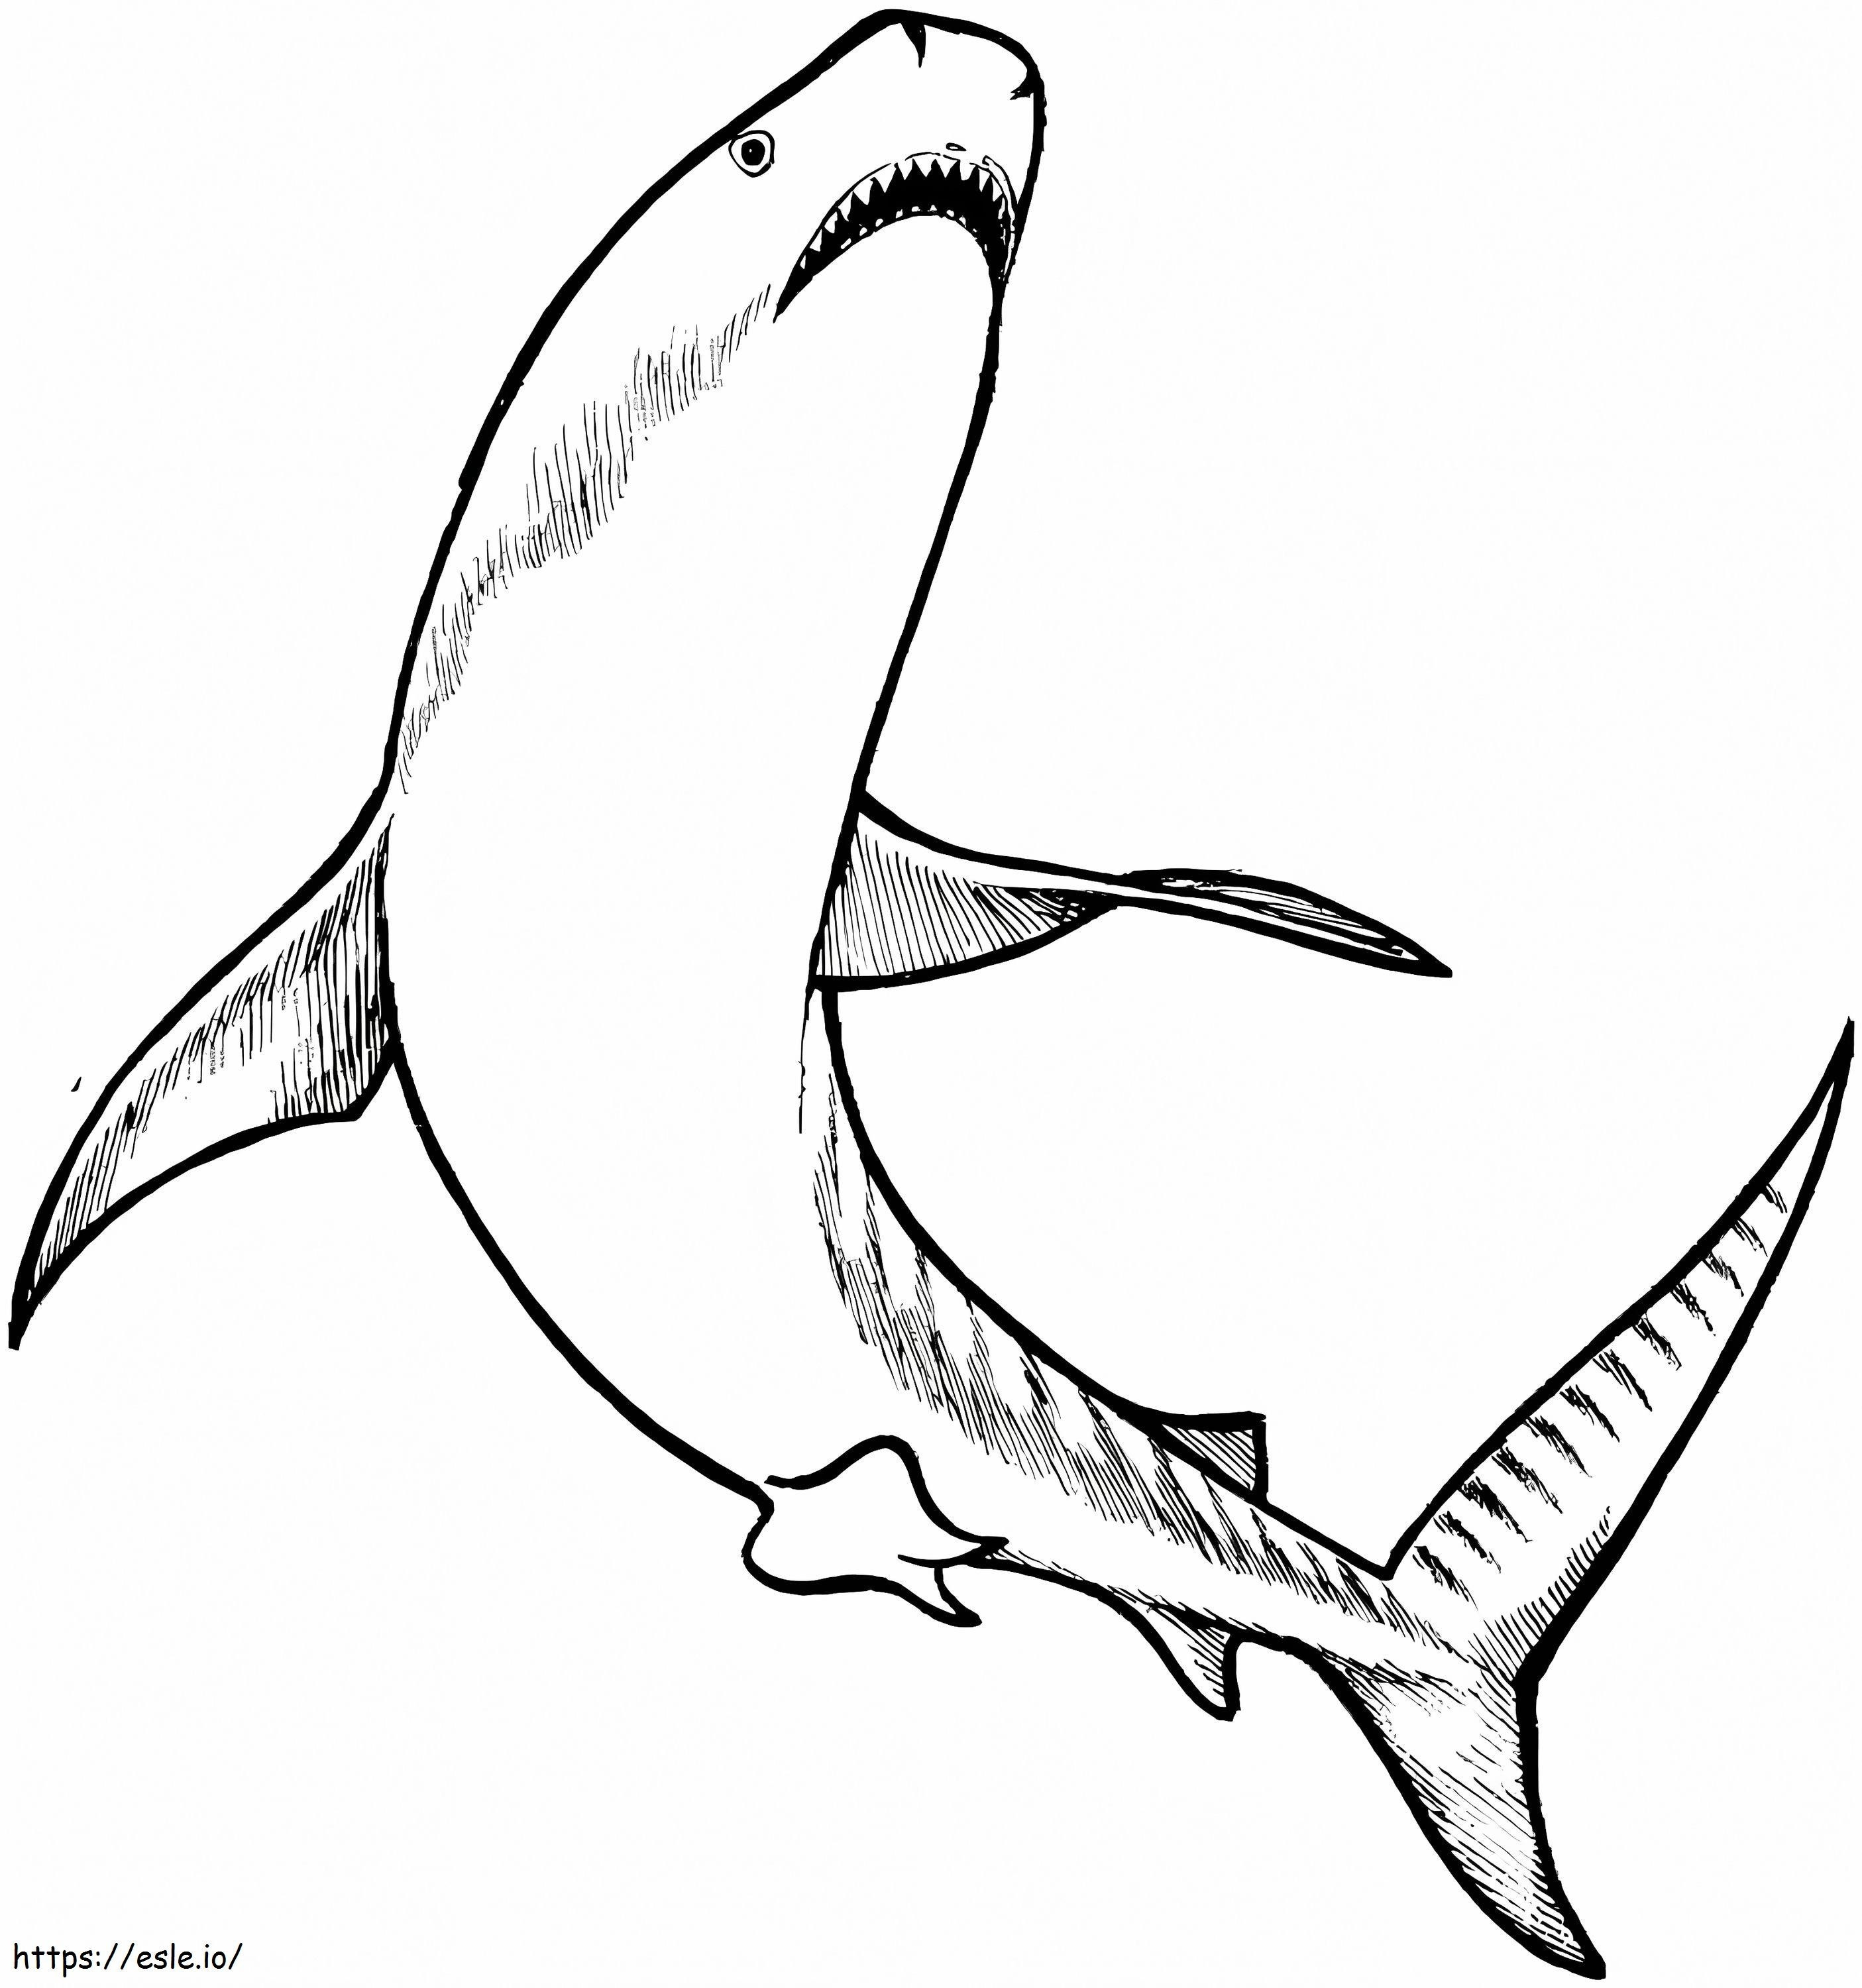 Tiger Shark coloring page